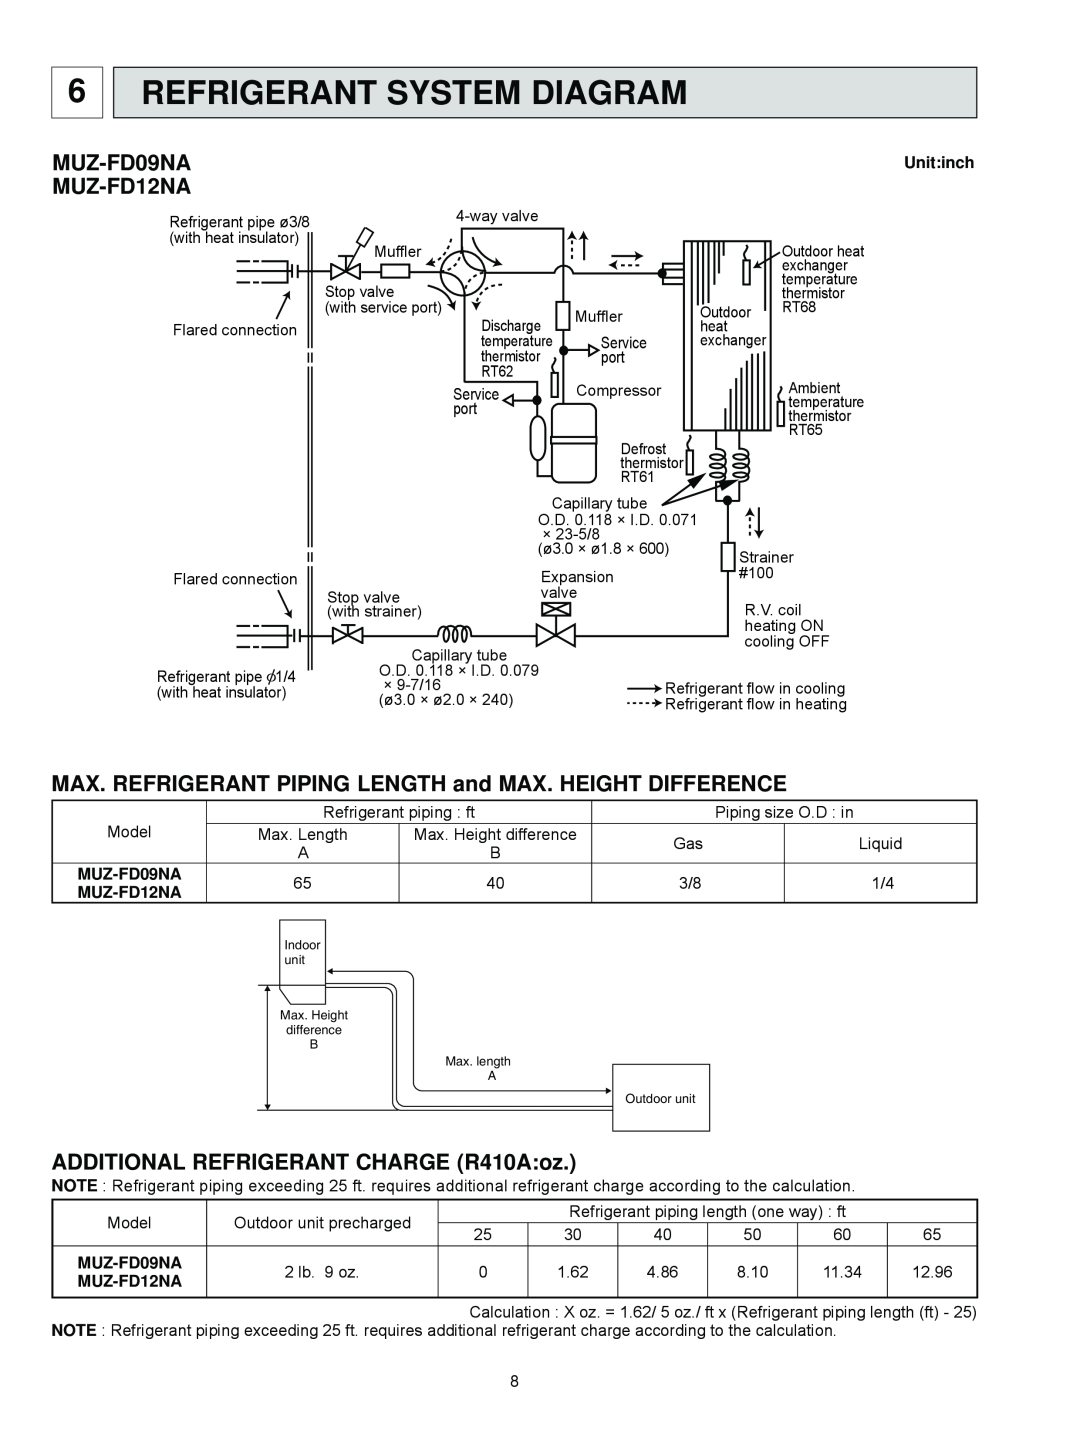 Black & Decker MUZ-FD12NA- U1 Refrigerant System Diagram, MUZ-FD09NA, ADDITIONAL REFRIGERANT CHARGE R410A oz 